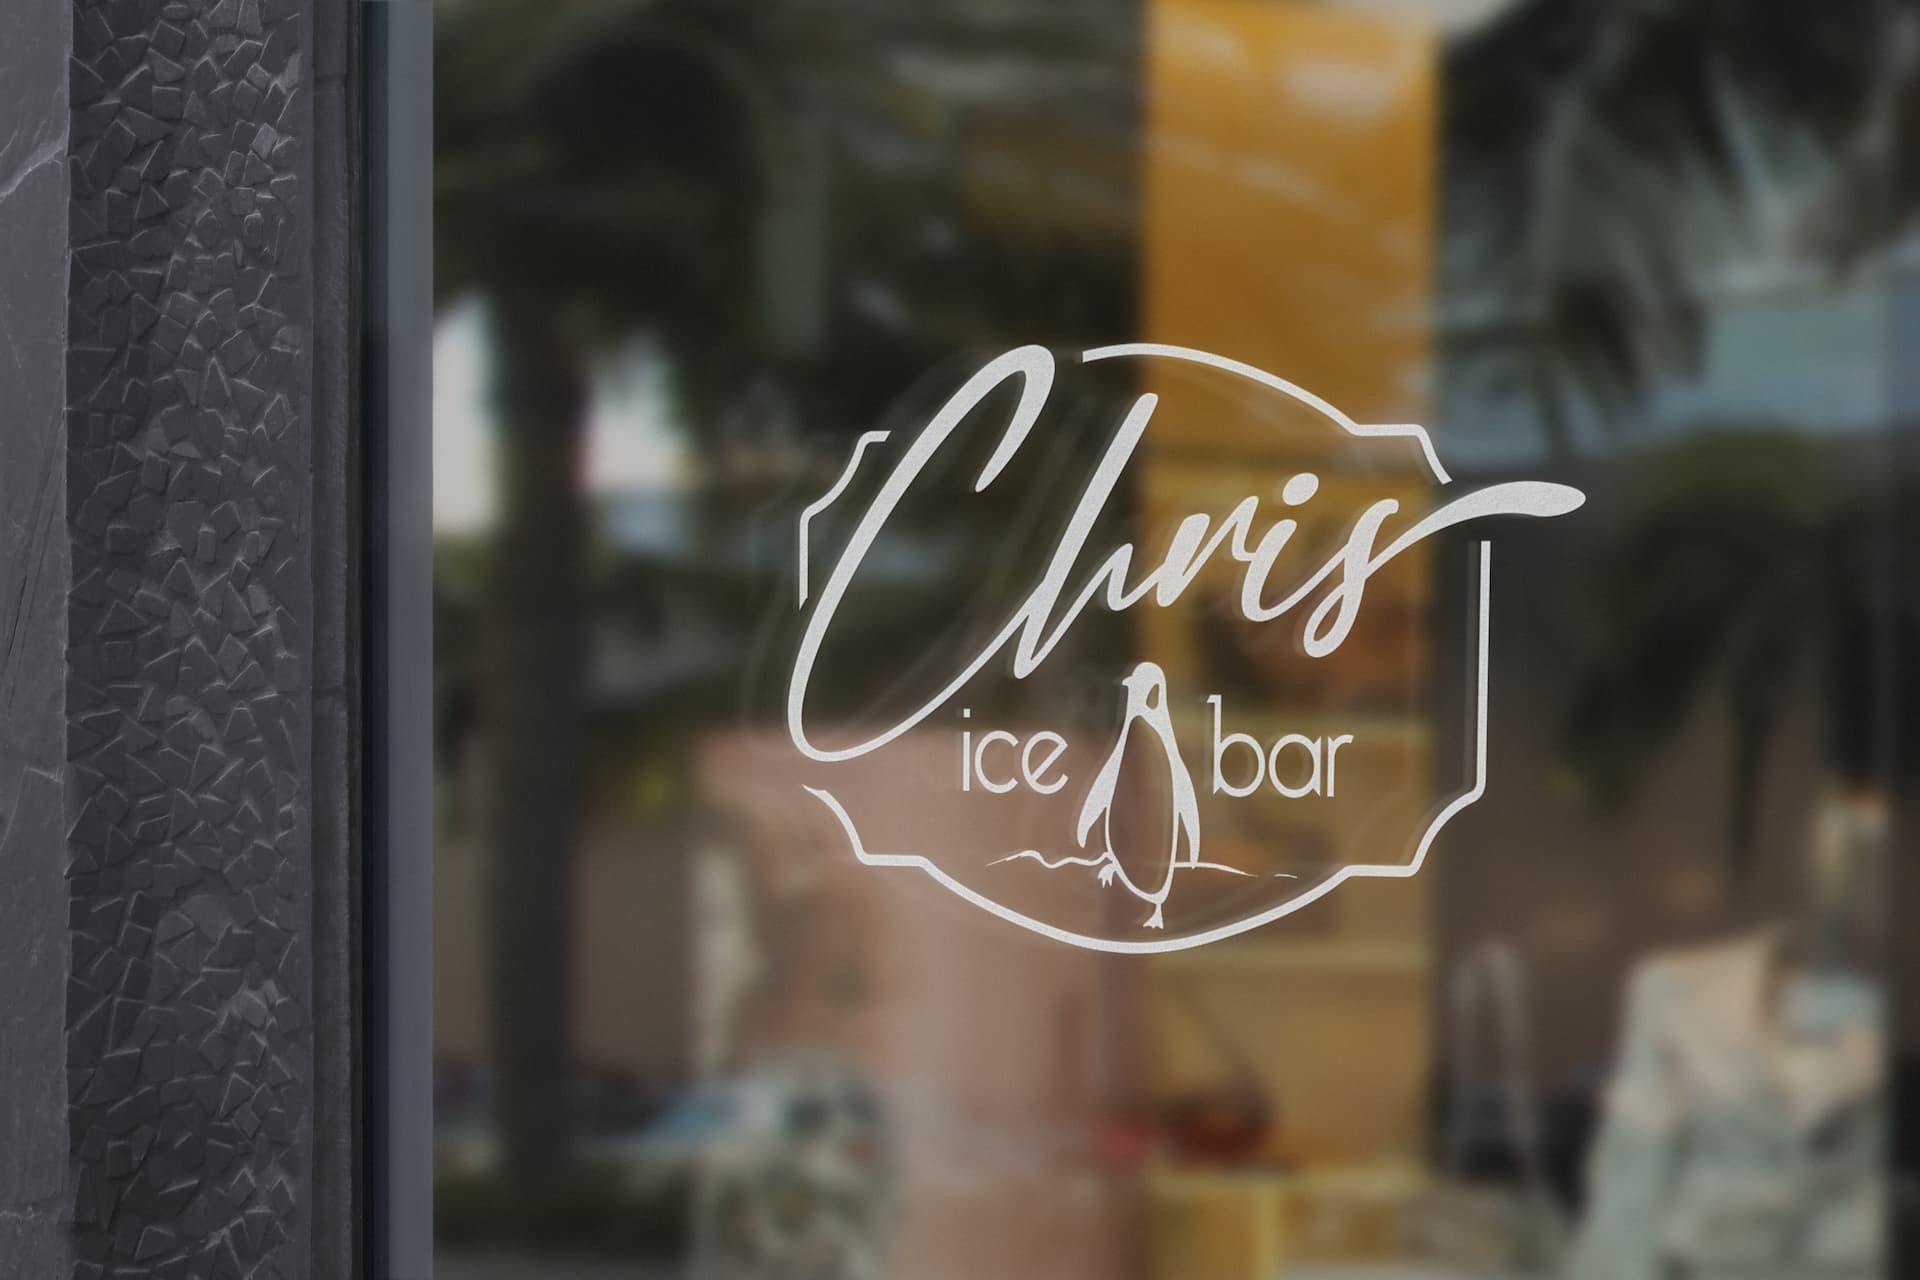 Chris Ice Bar mock-up